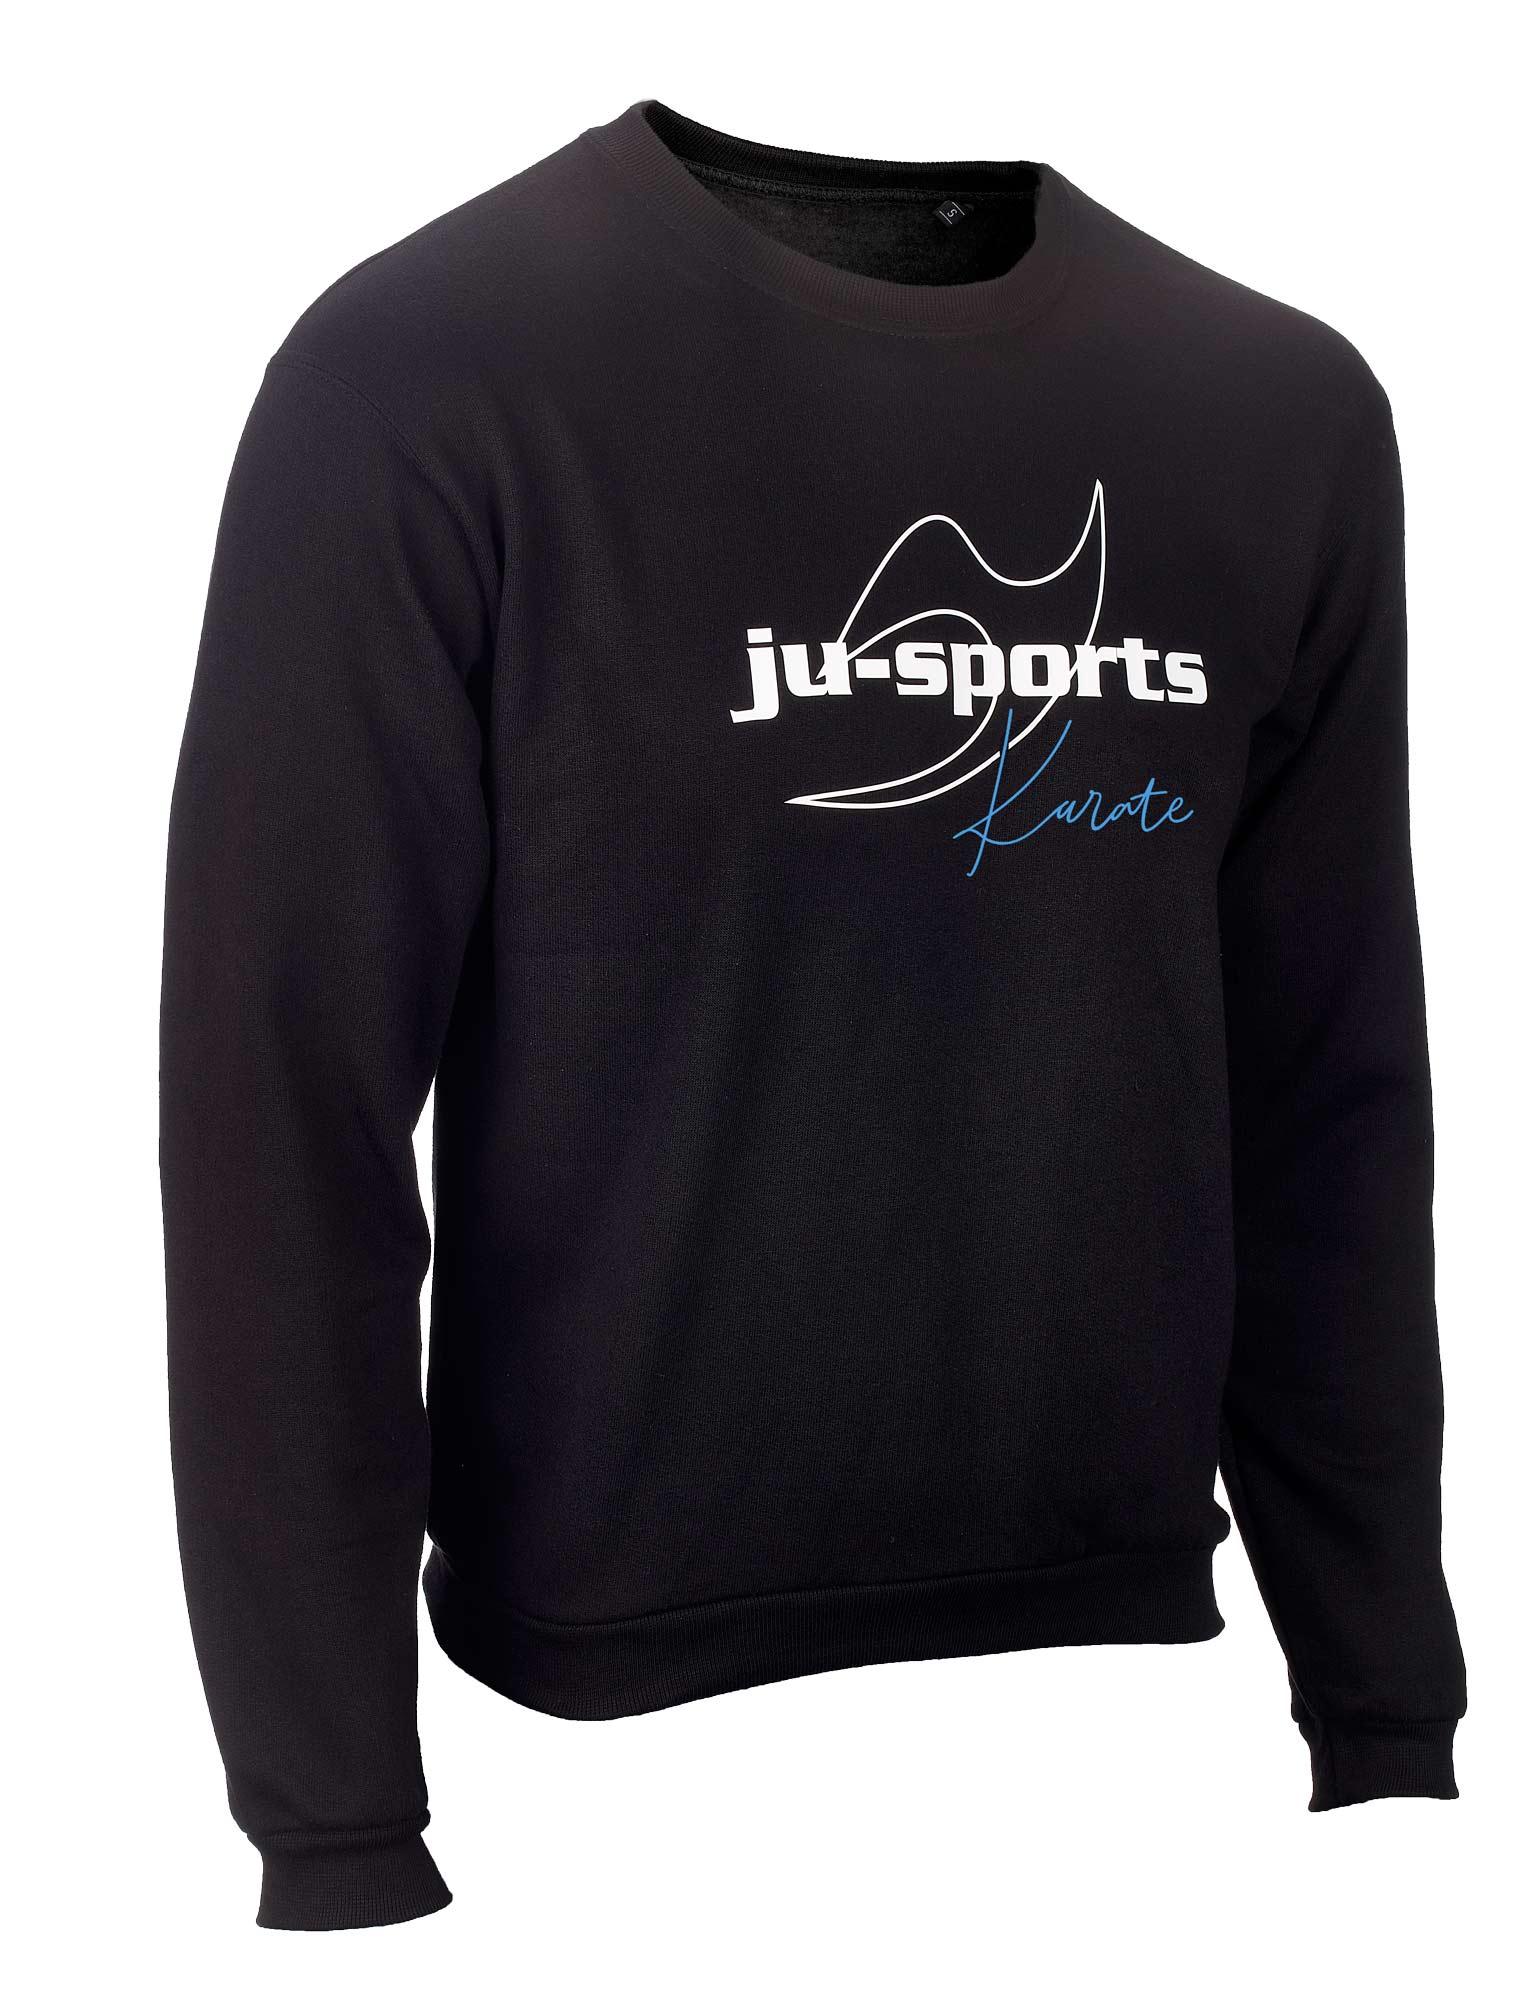 Ju-Sports Signature Line "Karate" Sweater